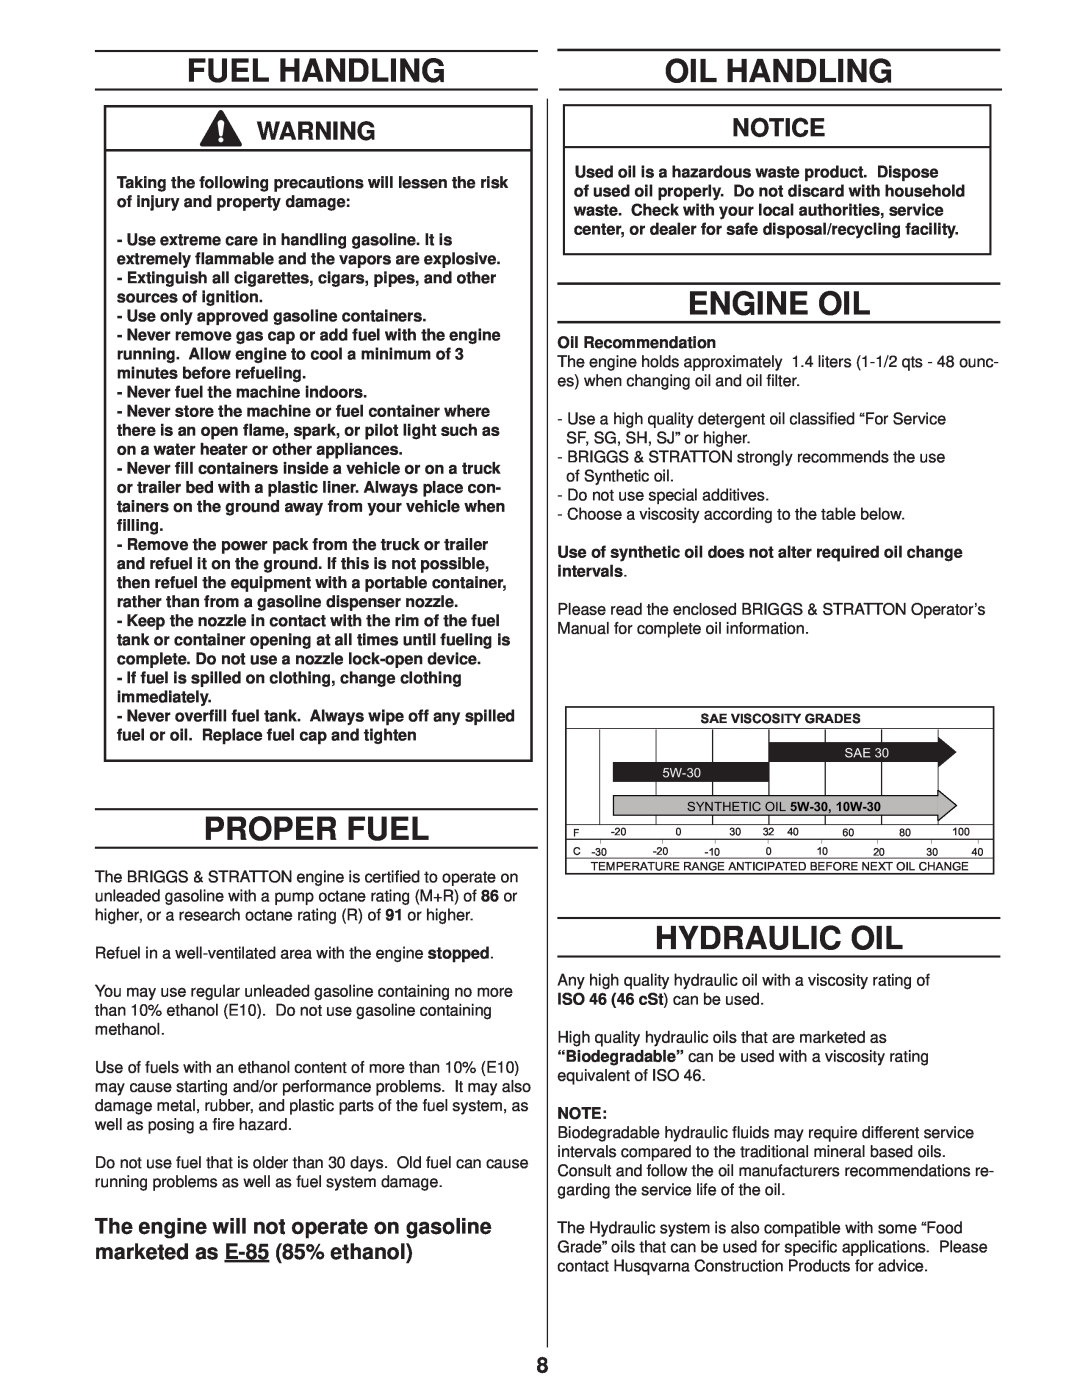 Husqvarna PP 418 Fuel Handling, Proper Fuel, Oil Handling, Engine Oil, Hydraulic Oil, Never fuel the machine indoors 